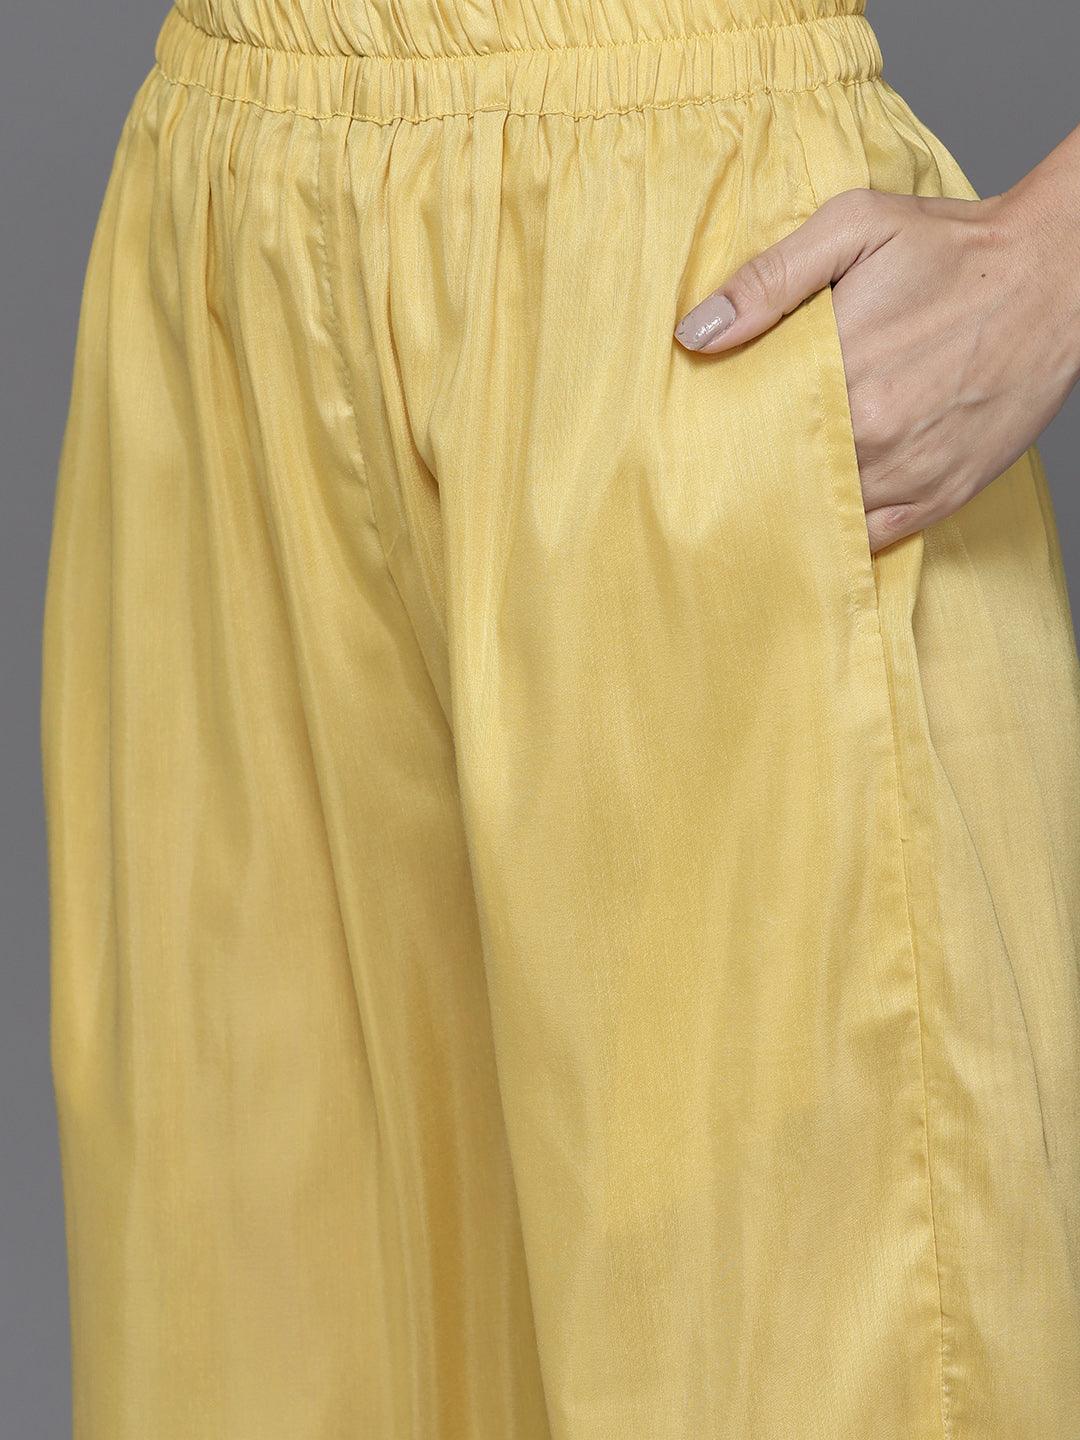 Yellow Woven Design Silk Blend Straight Kurta With Palazzos & Dupatta